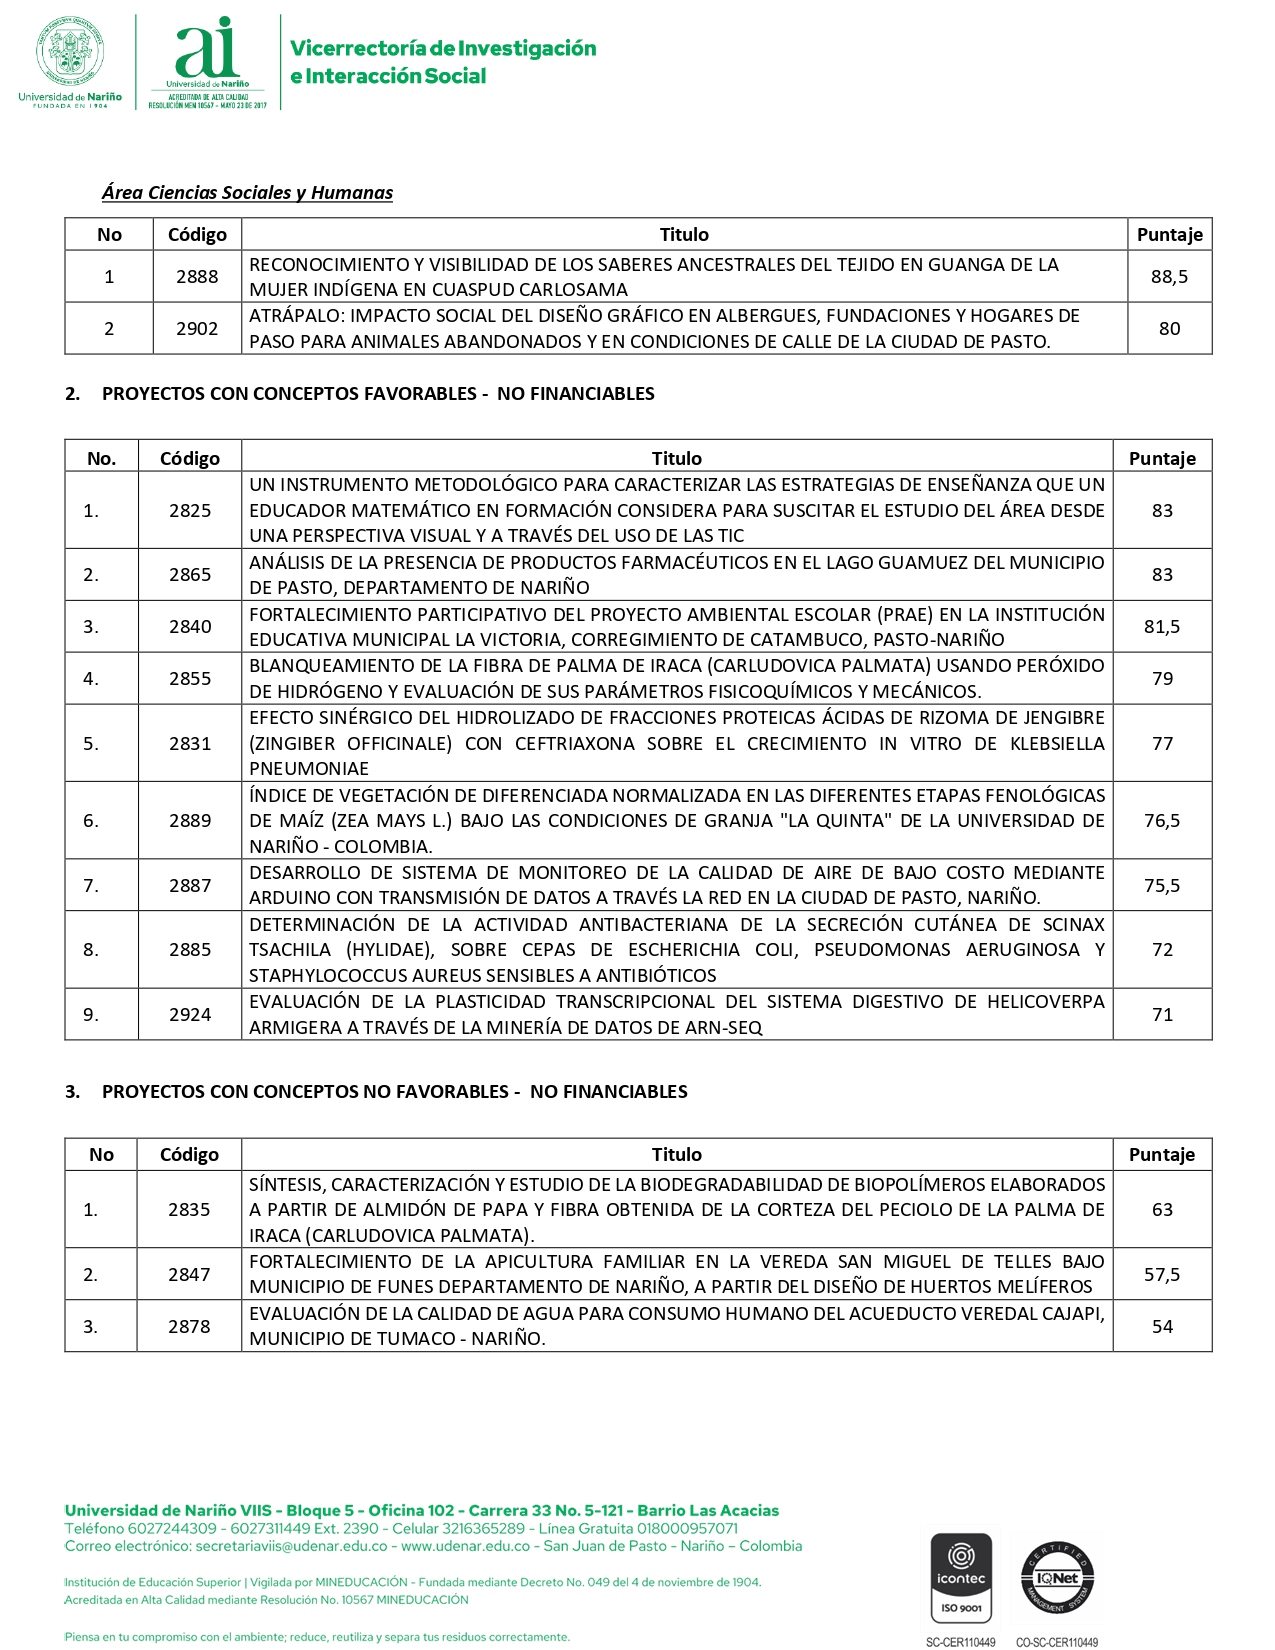 UDENAR-PERIODICO-COMUNICADO-003-CONVOCATORIAS-DE-INVESTIGACION-2_page-0006